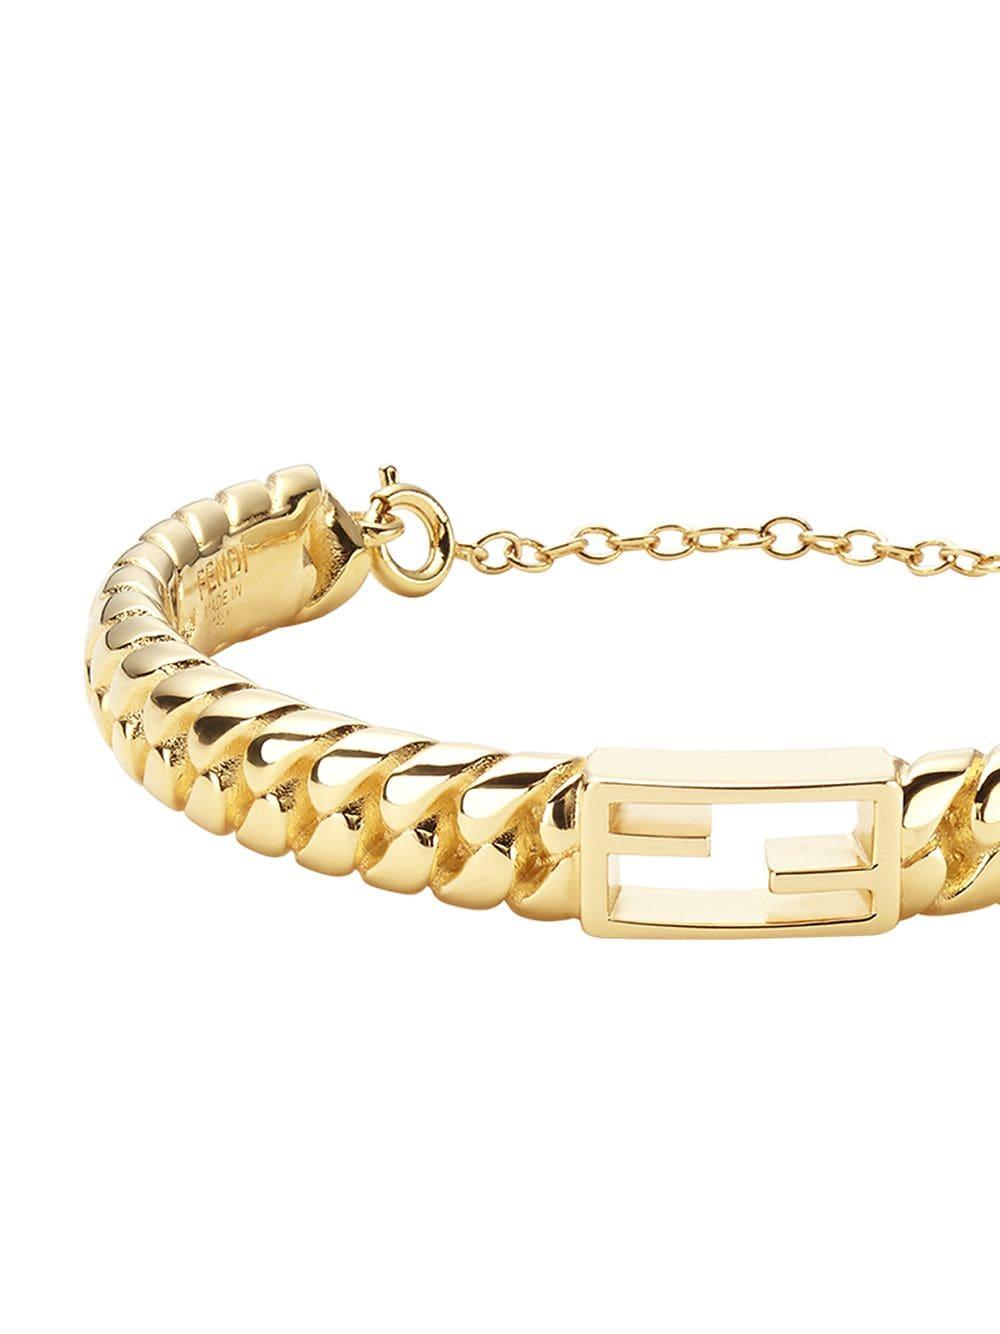 Fendi Medium Baguette Bracelet in Gold (Metallic) - Lyst